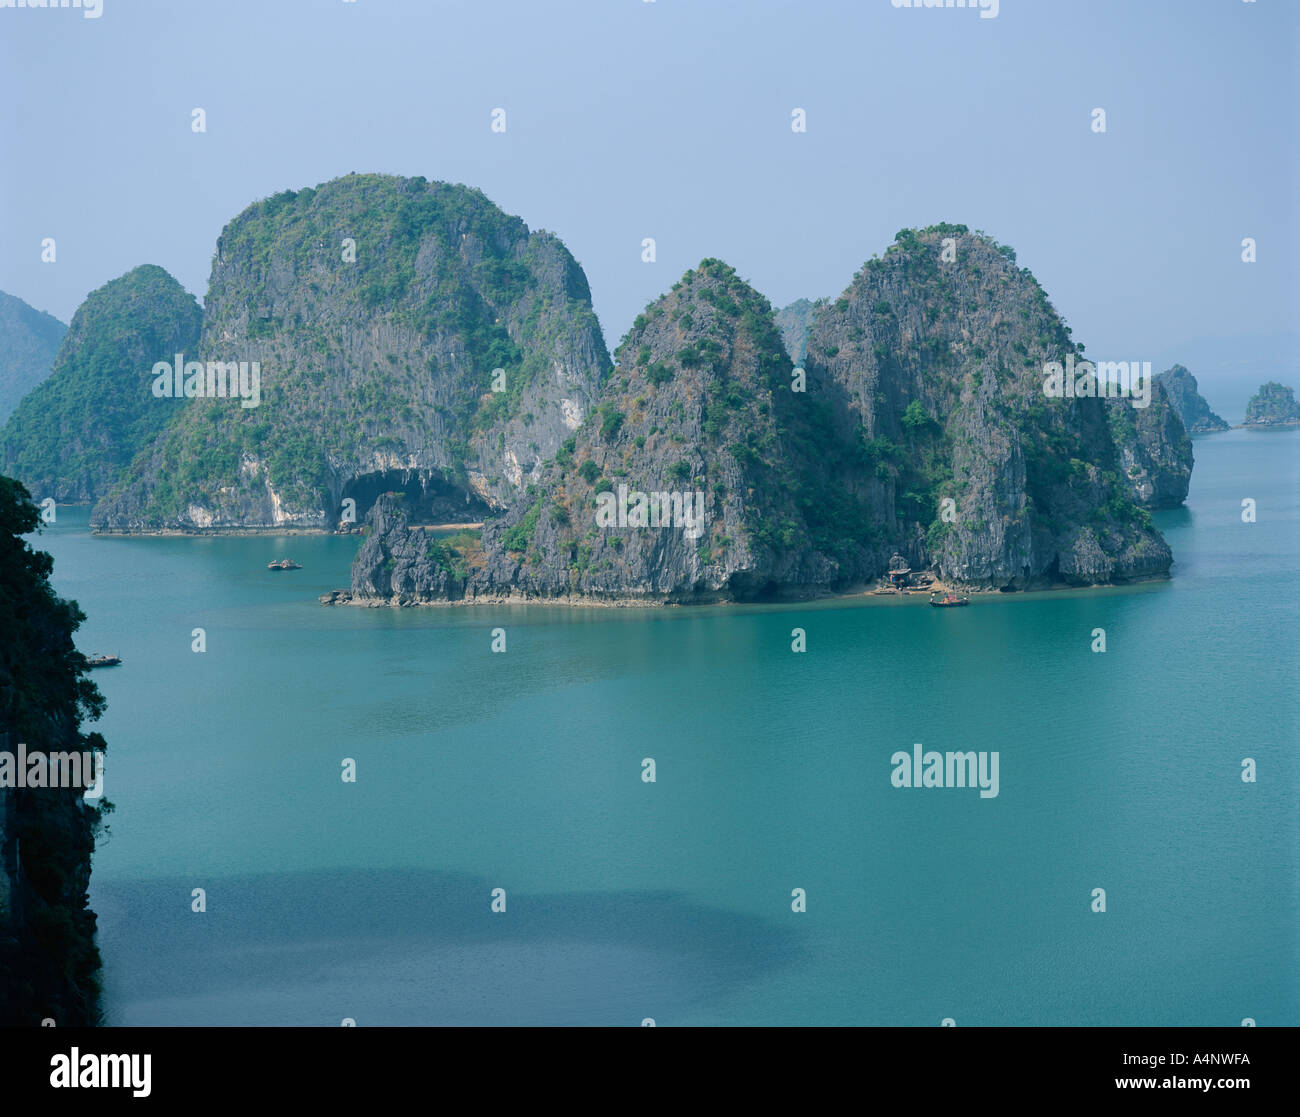 Halong Bay Vietnam Indocina Asia del sud-est asiatico Foto Stock